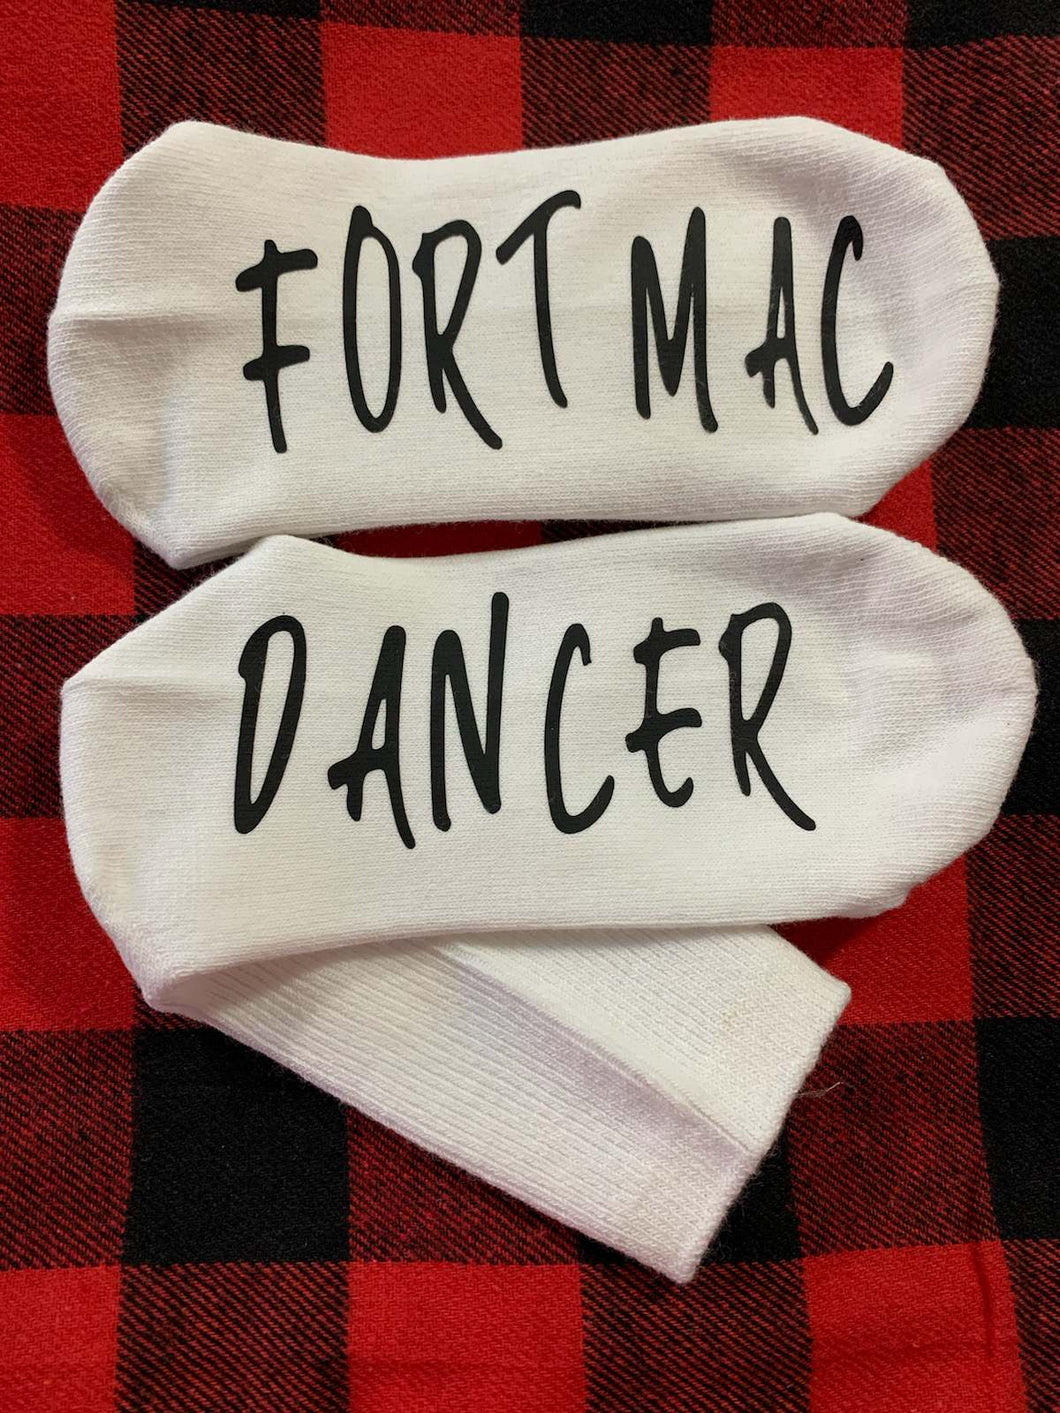 FORT MAC DANCER socks